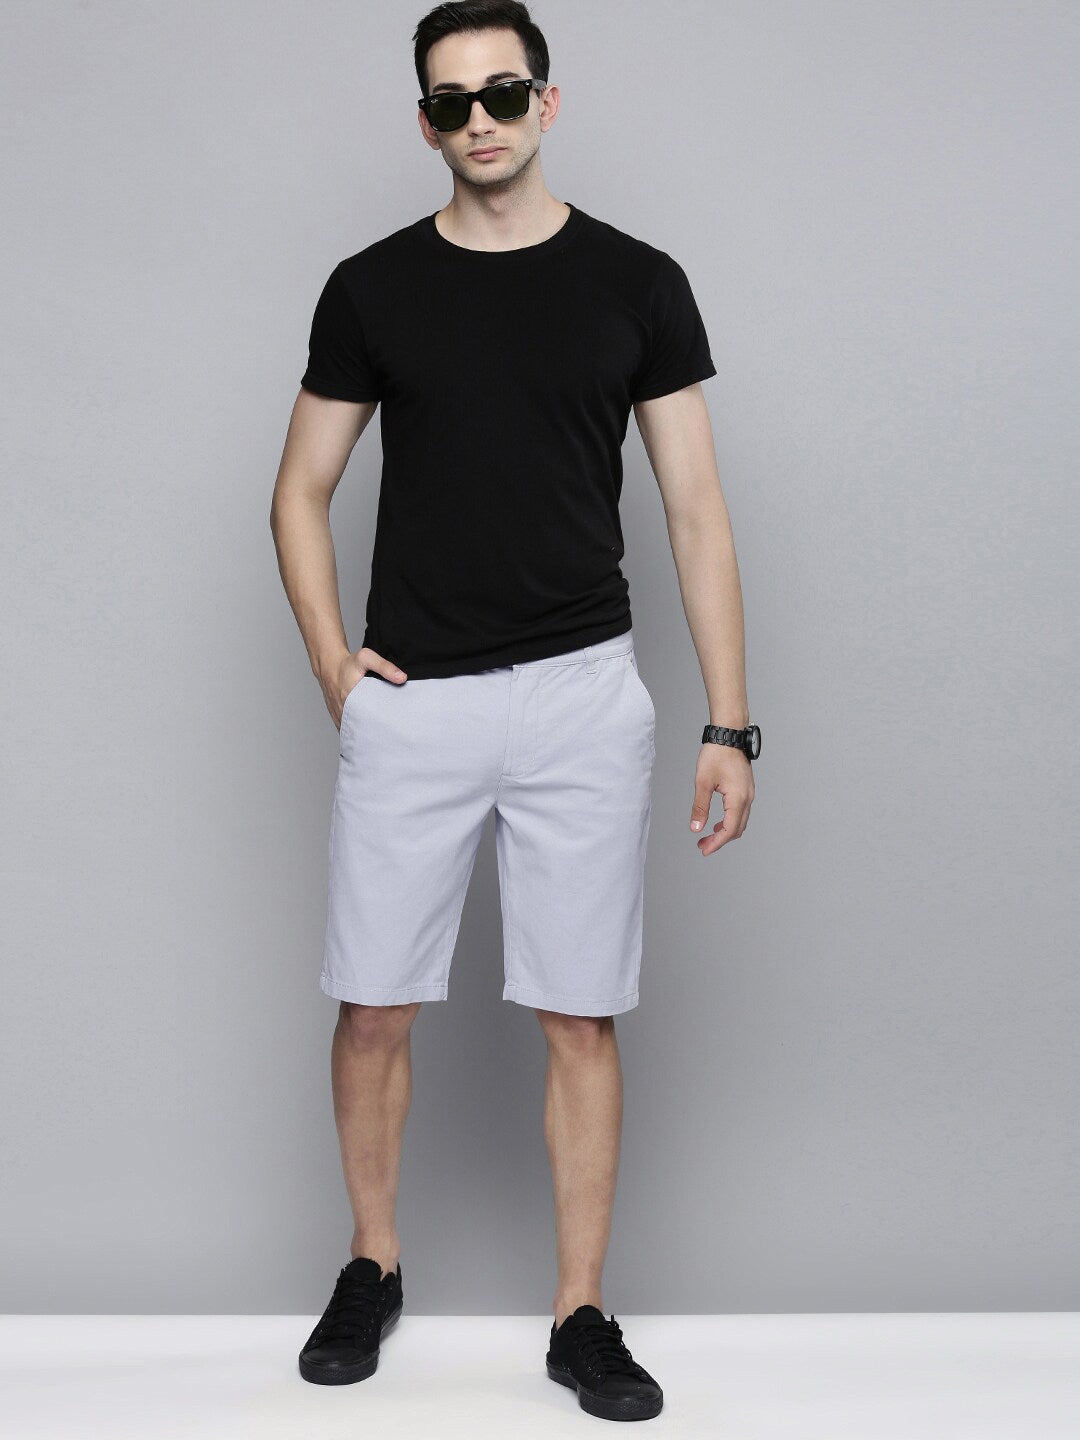 Shop Men Short Shorts Online.